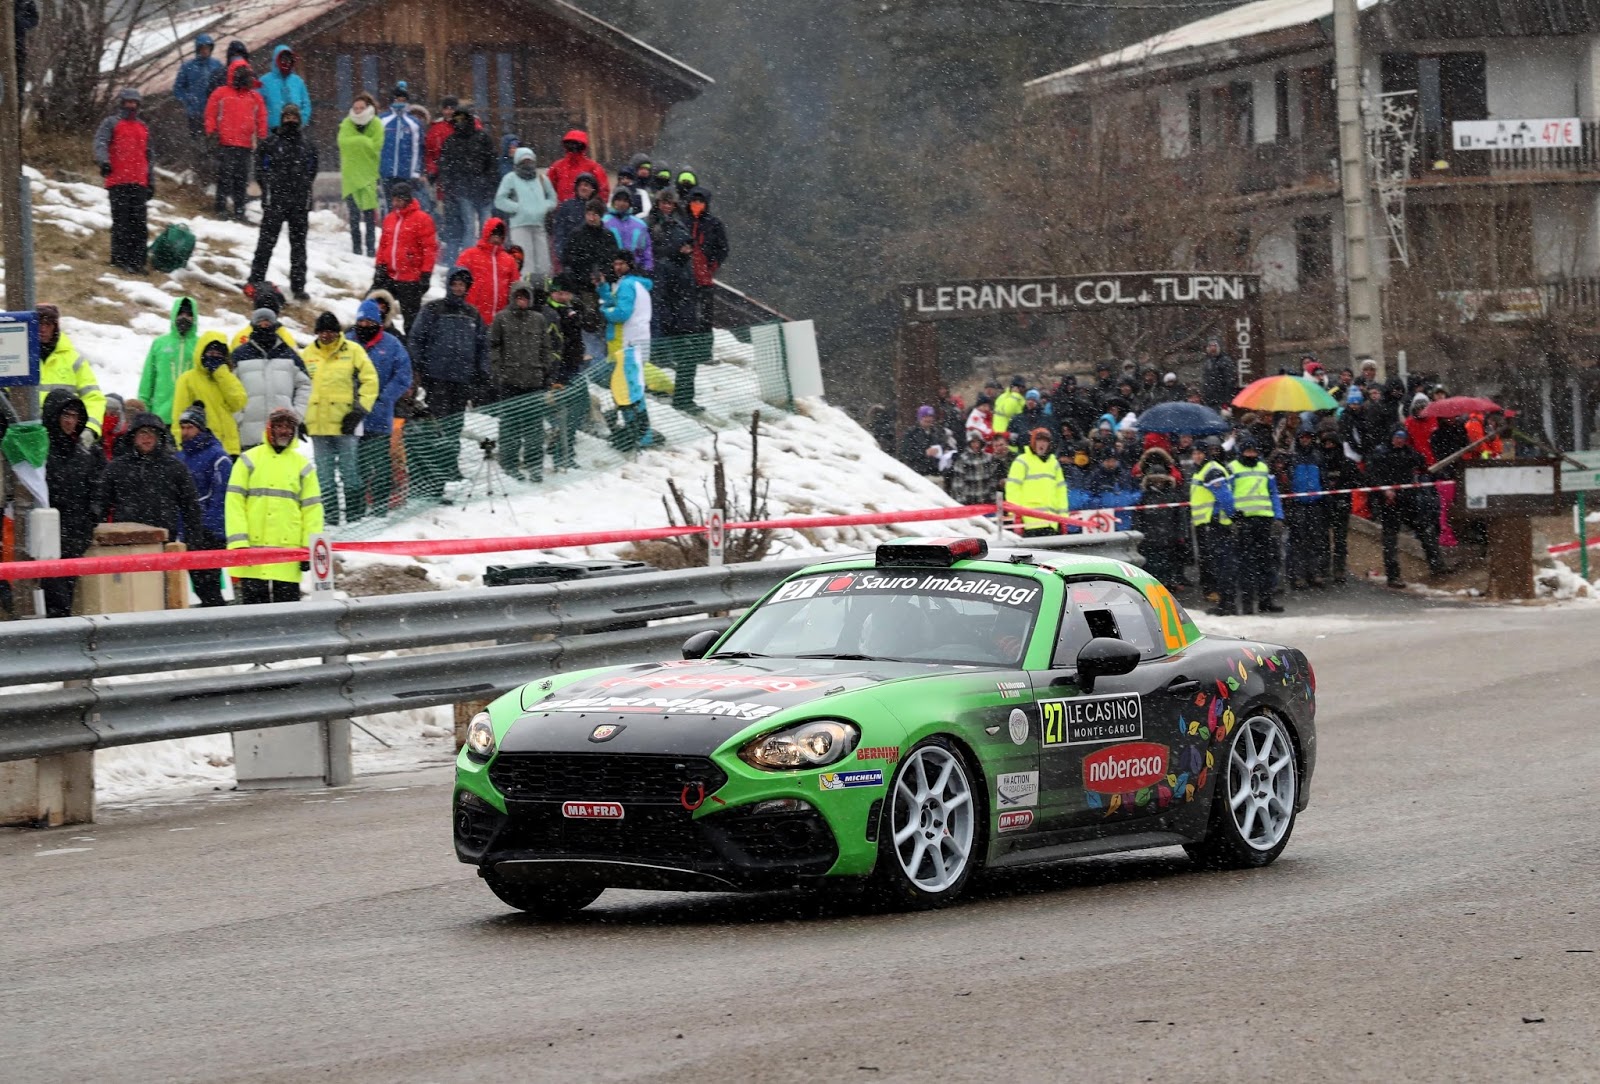 170123 Abarth Noberasco Θετική παρουσία για το Abarth 124 rally στην αγωνιστική του πρεμιέρα στο 85ο Rally του Monte Carlo